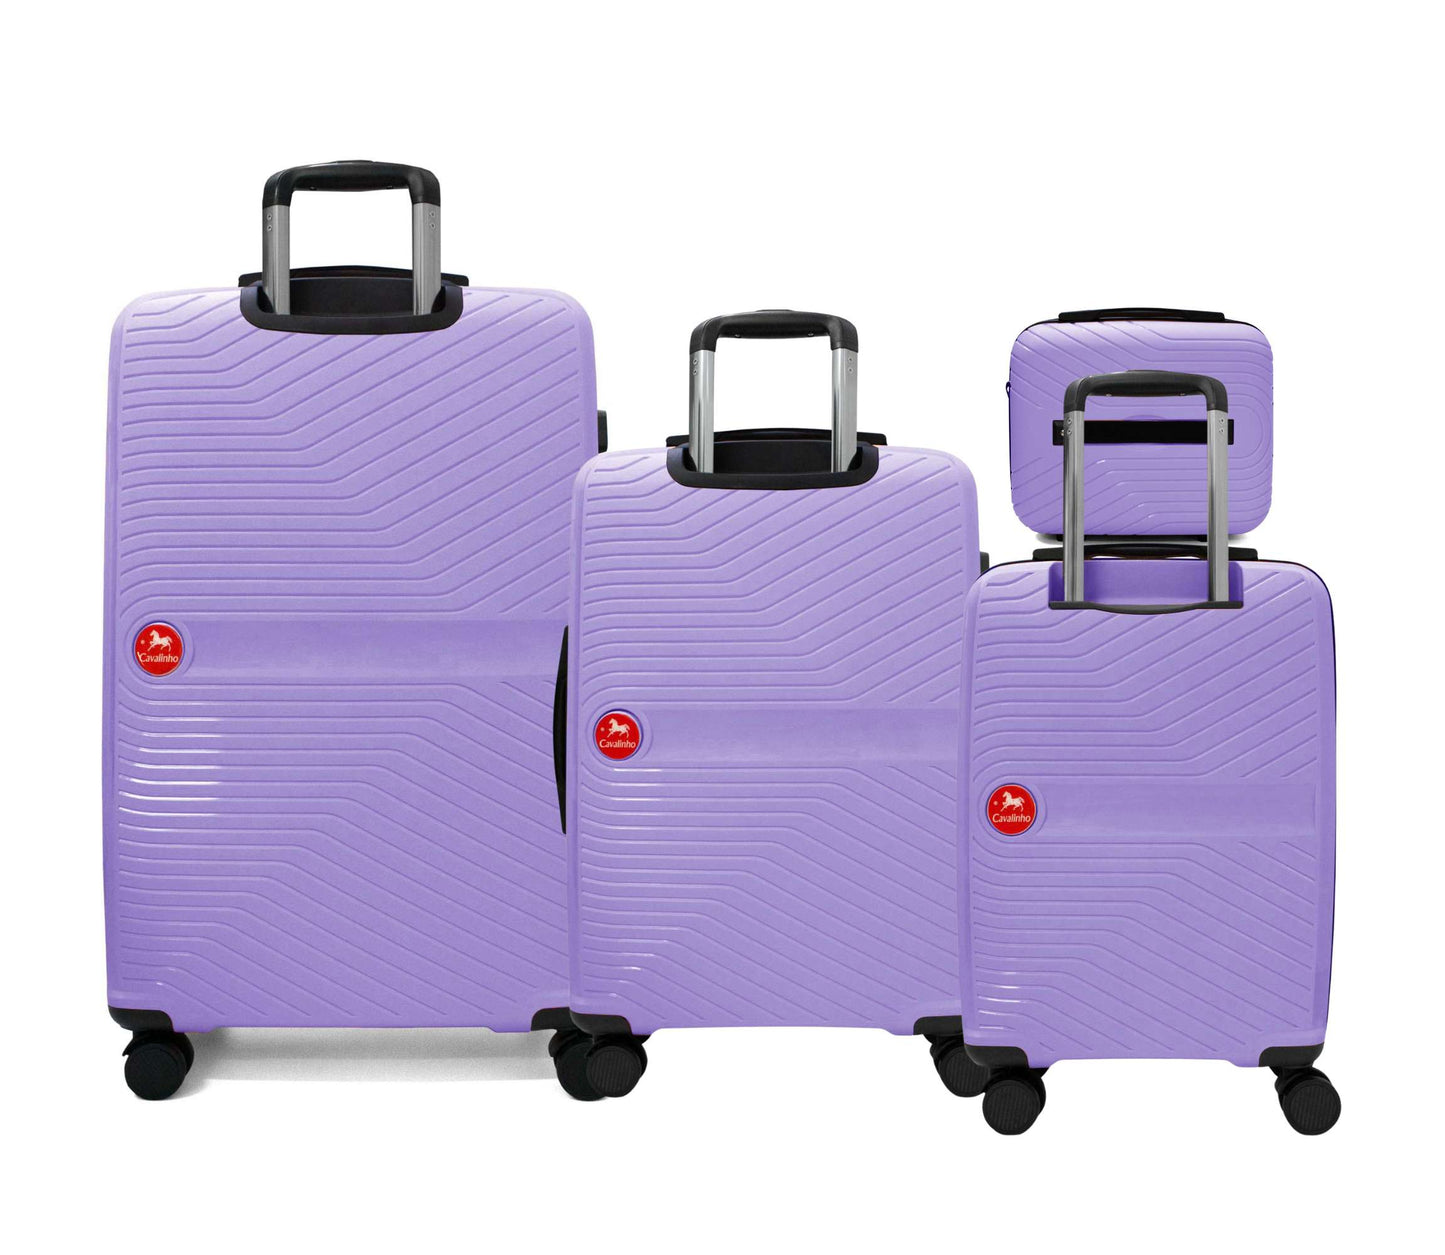 #color_ Lilac | Cavalinho Canada & USA 4 Piece Set of Colorful Hardside Luggage (15", 19", 24", 28") - Lilac - 68020004.39.S4_2